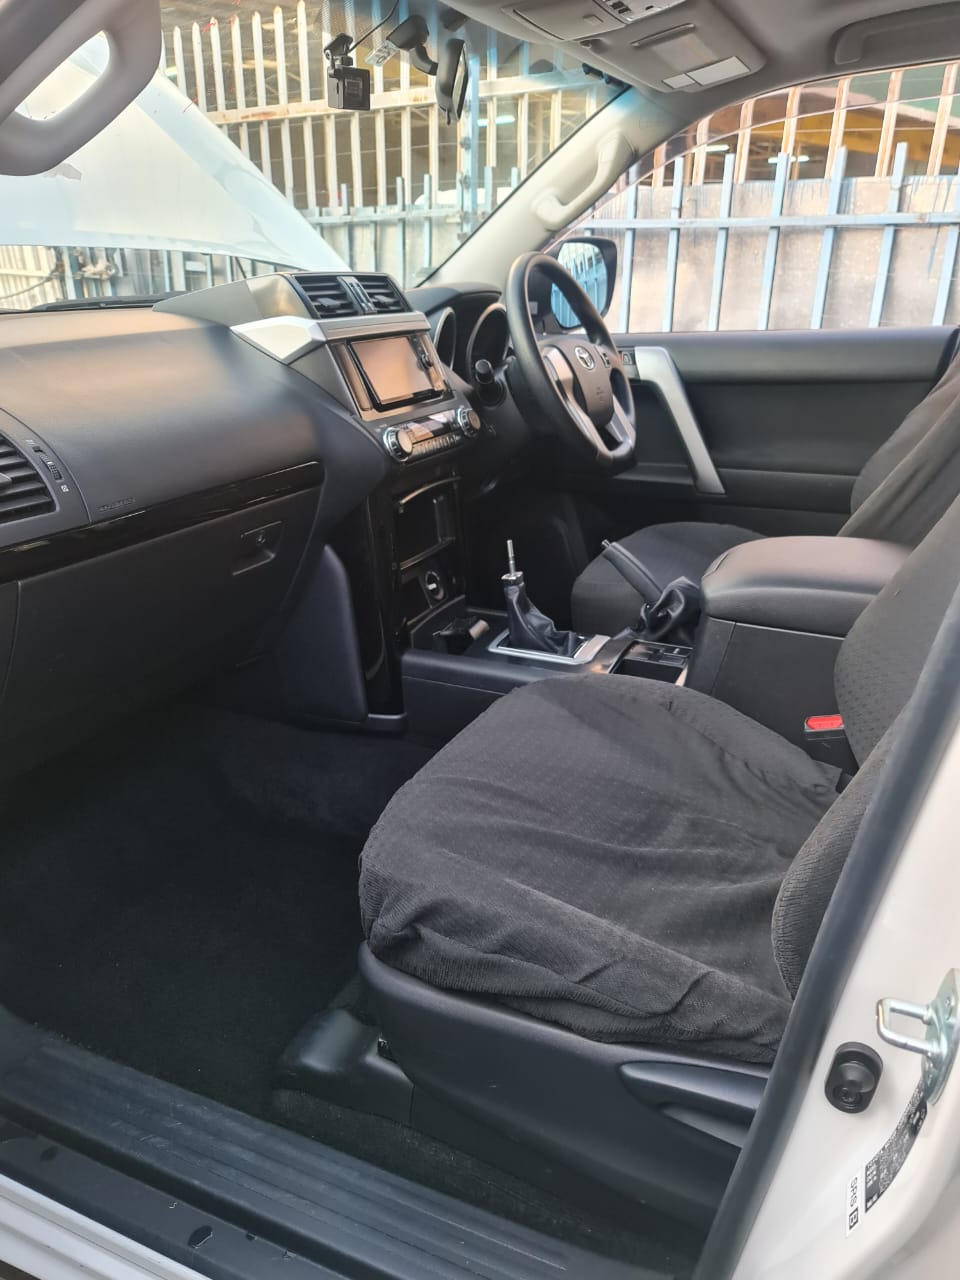 Toyota Prado 2017 SUNROOF 7 Seater Trade in Ok 5.5M ONLY